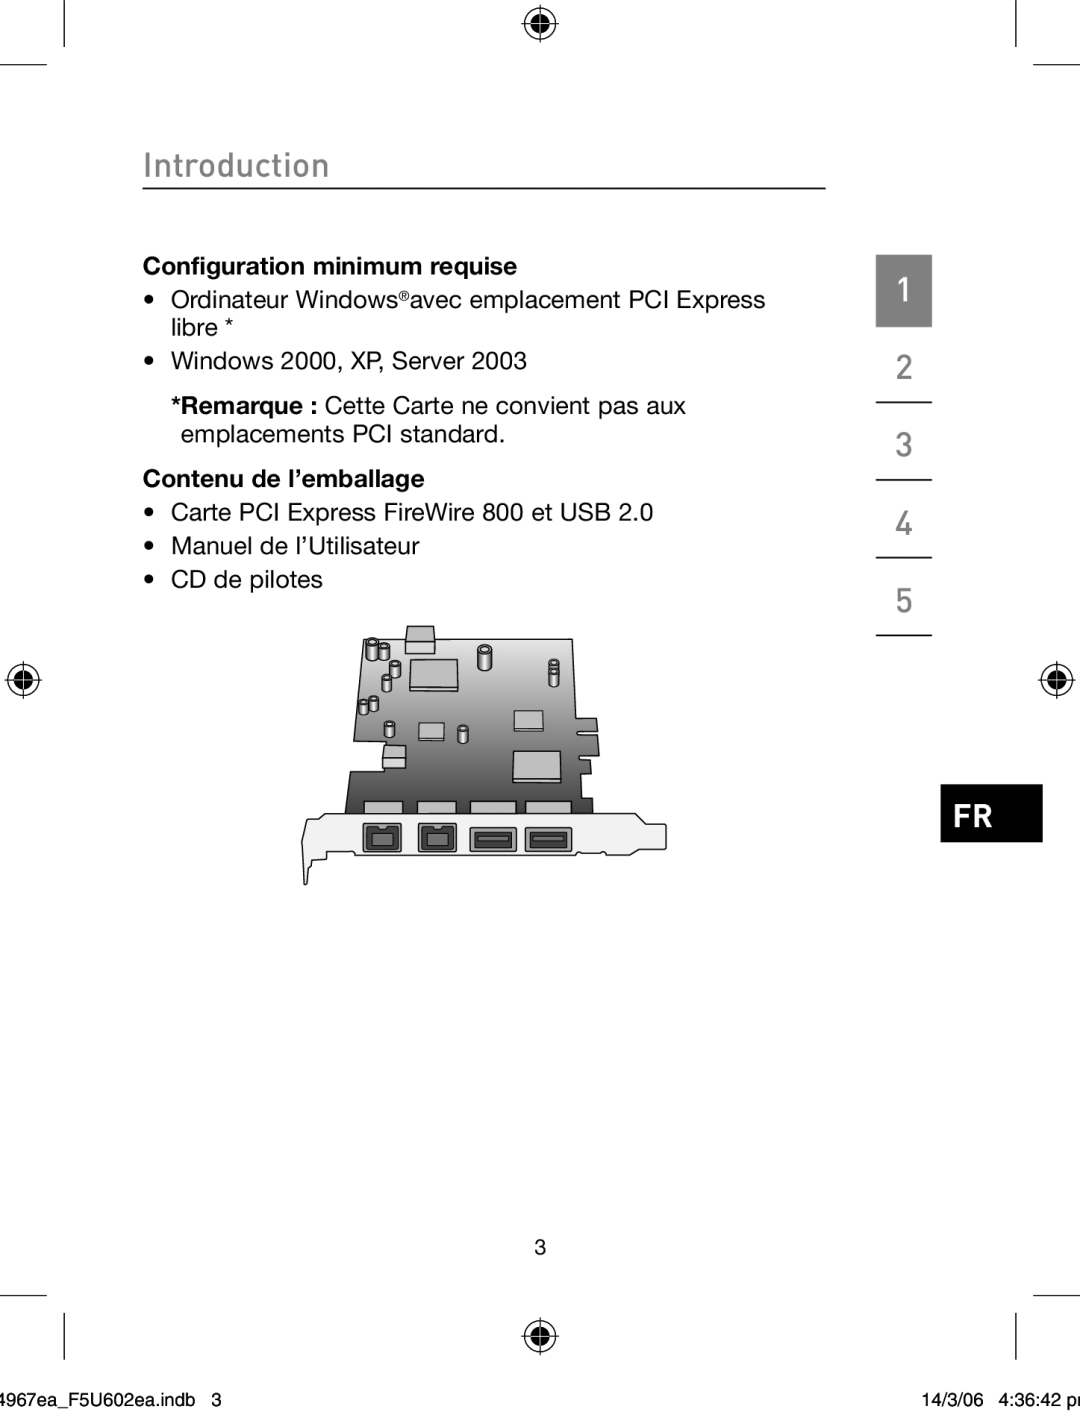 Belkin F5U602EA Configuration minimum requise, Contenu de l’emballage, Introduction, 4967eaF5U602ea.indb, 14/3/06 43642 pm 